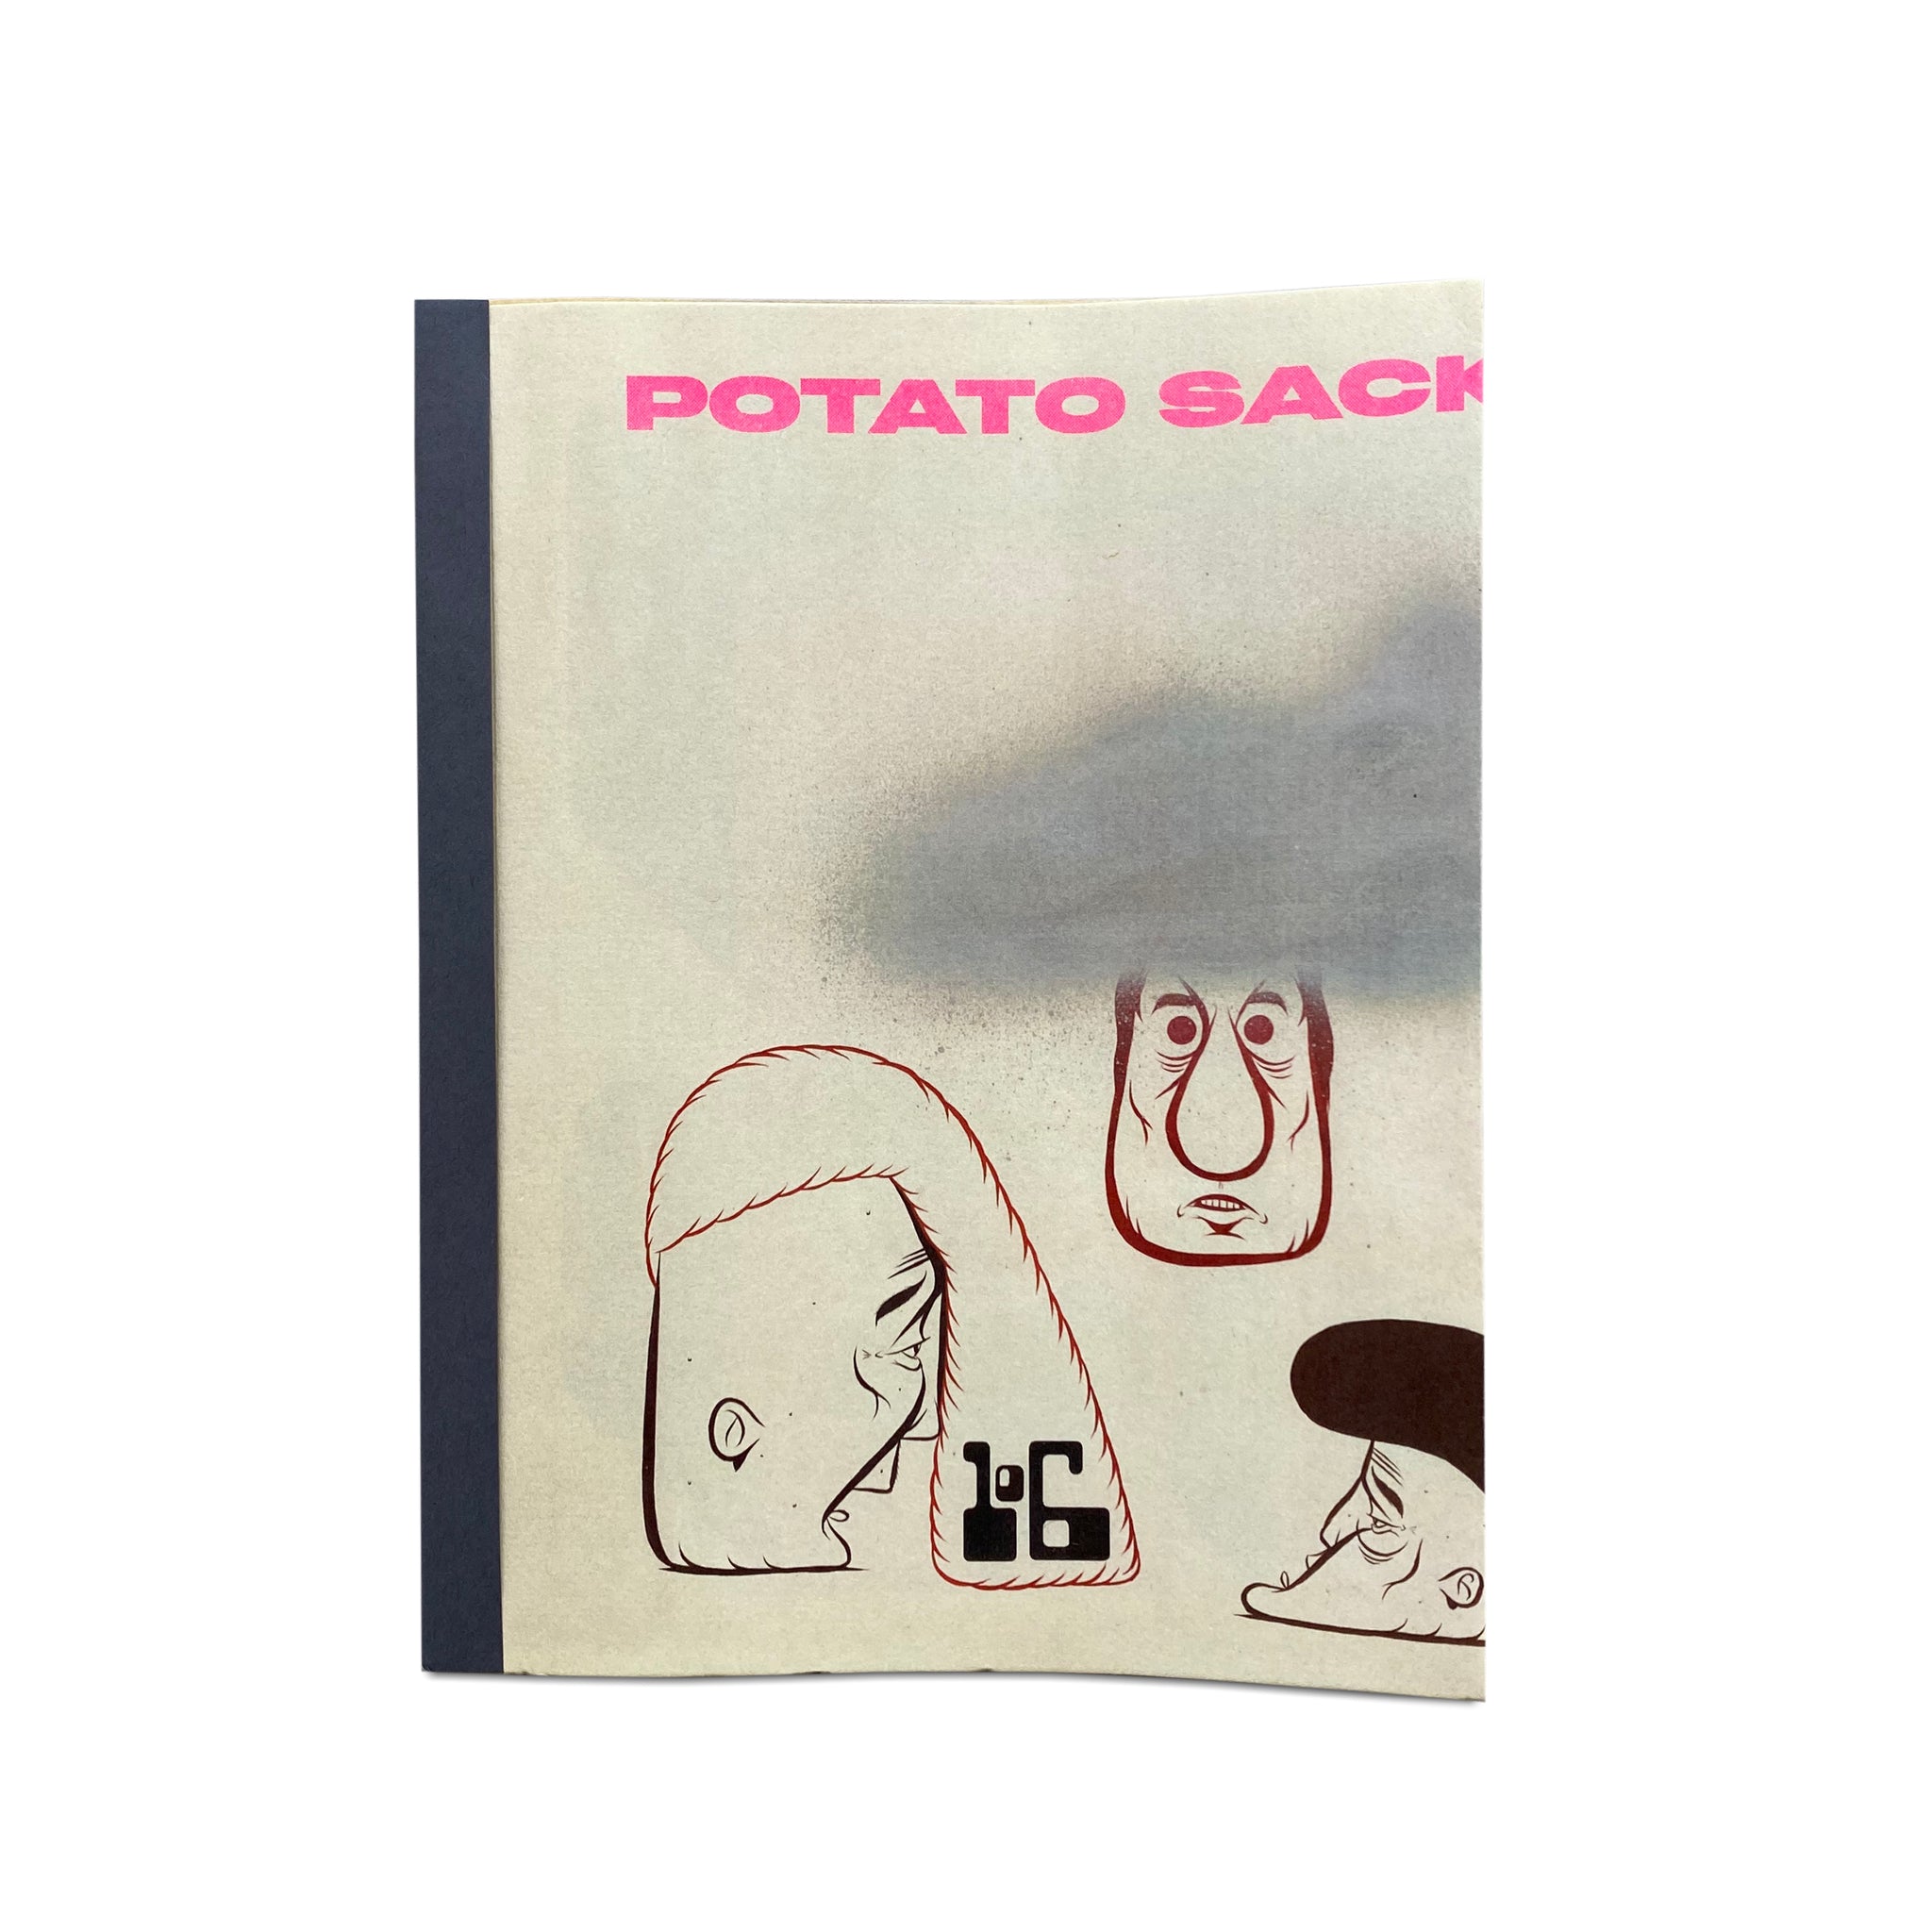 Potato Sack Body by Barry McGee